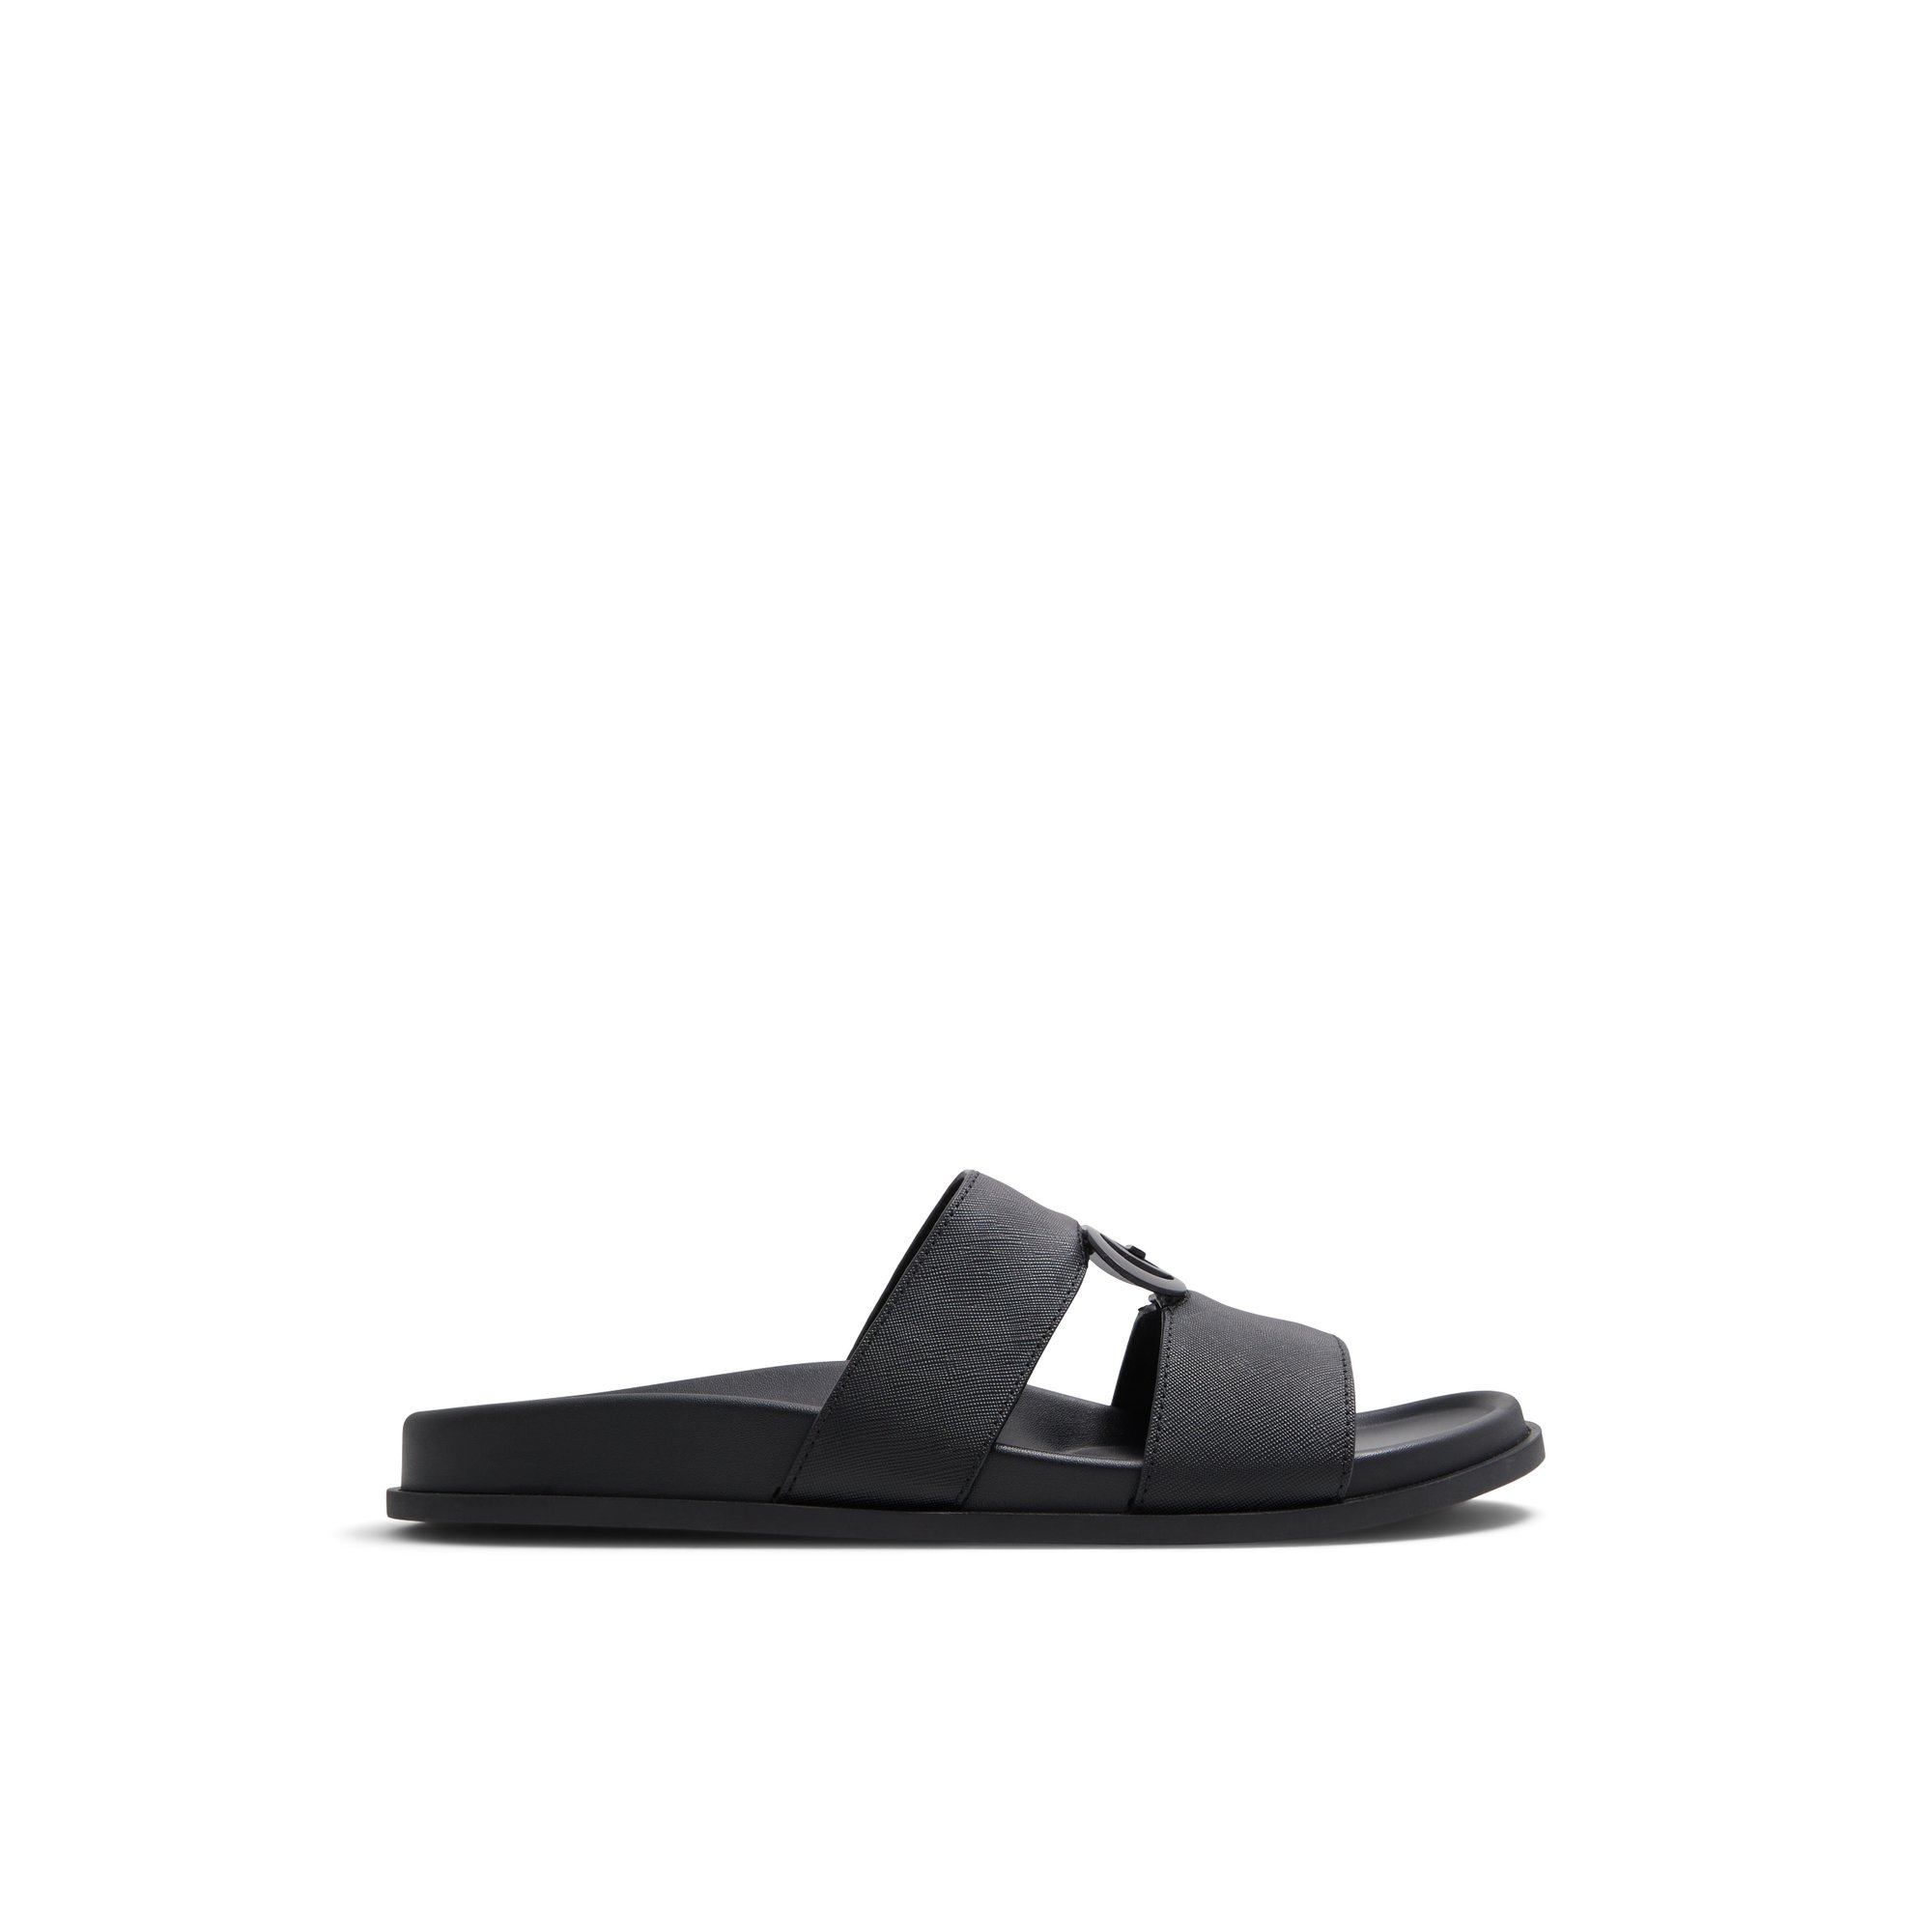 ALDO Reefside - Men's Sandals - Black